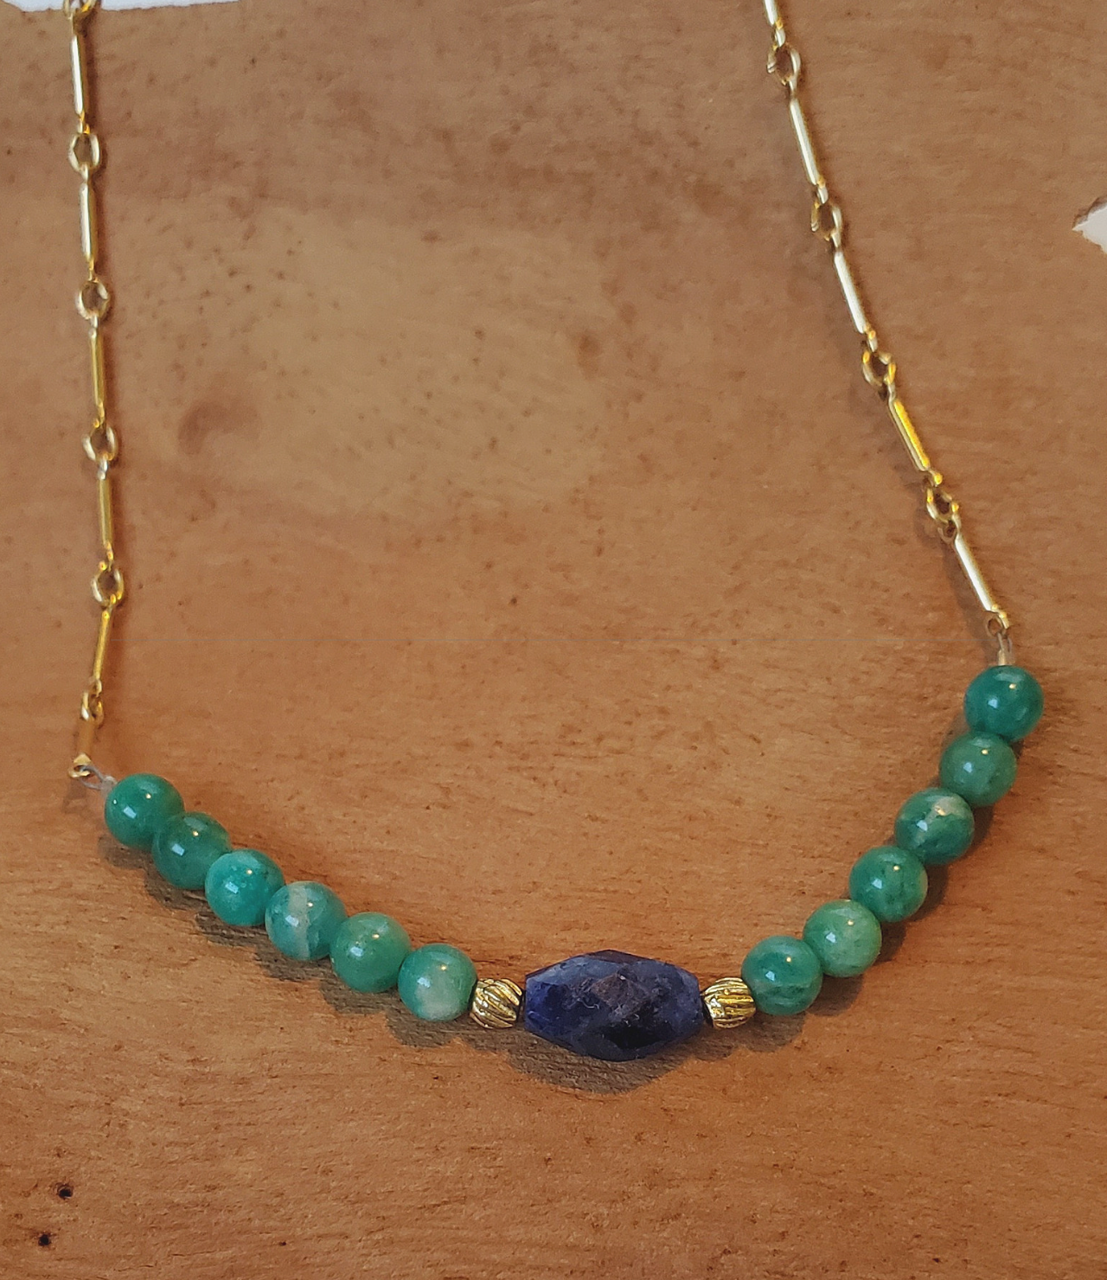 jdavis Collection. Color me Pretty in Blue Necklace